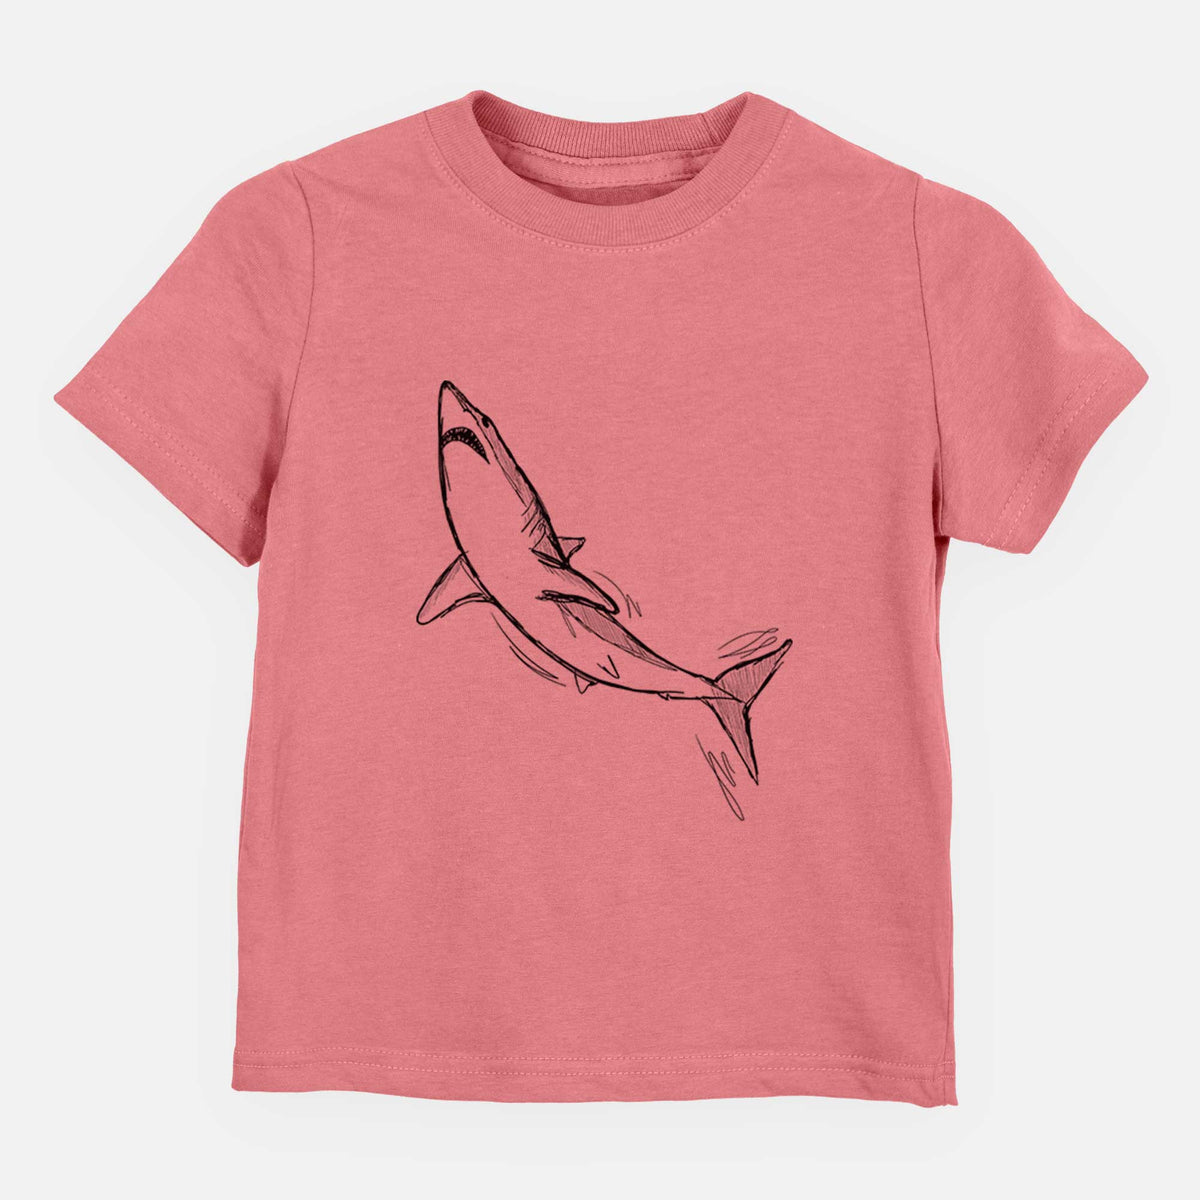 Shortfin Mako Shark - Kids Shirt